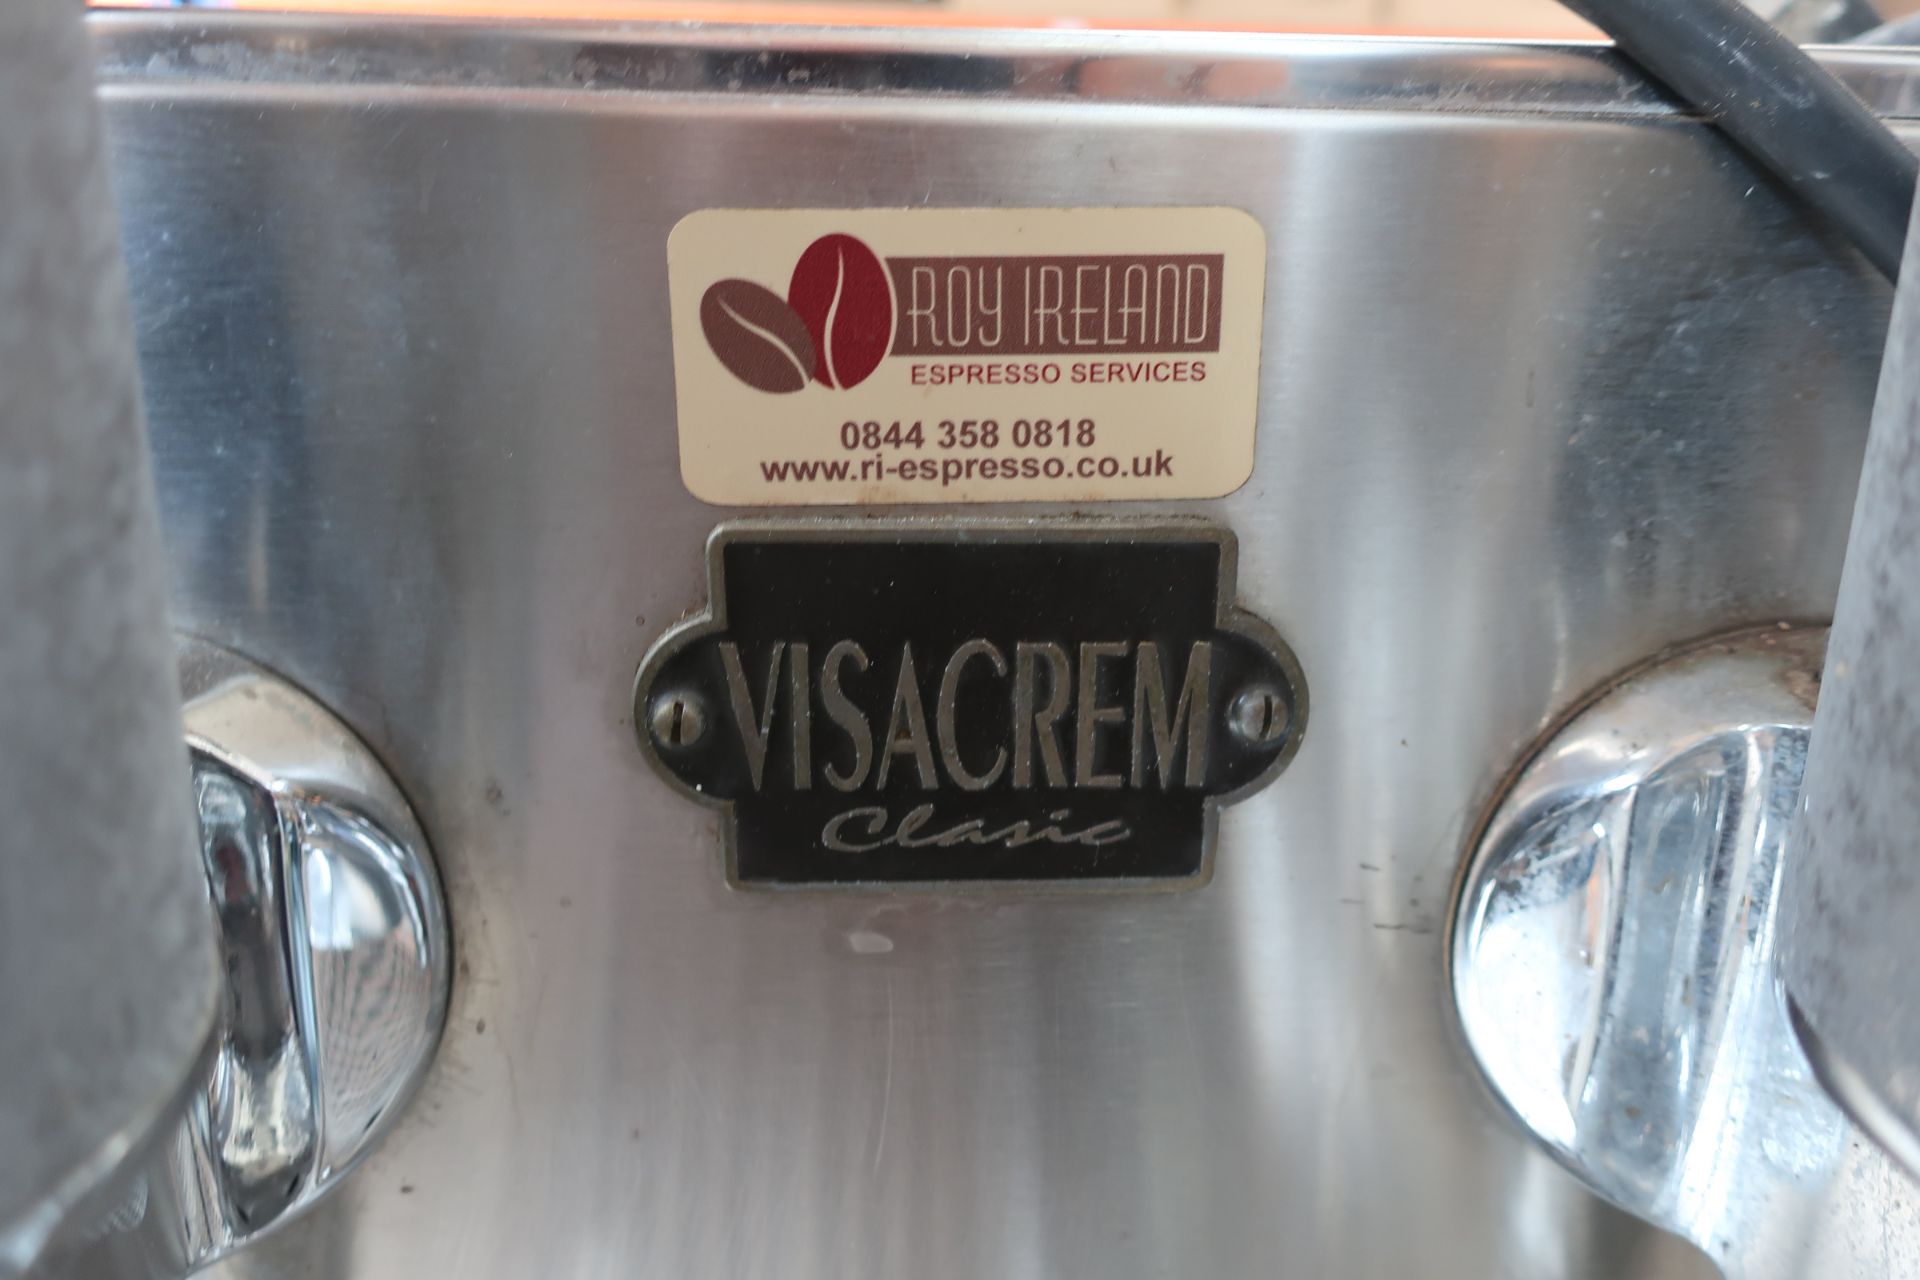 A Visacrem double coffee machine. - Image 4 of 4